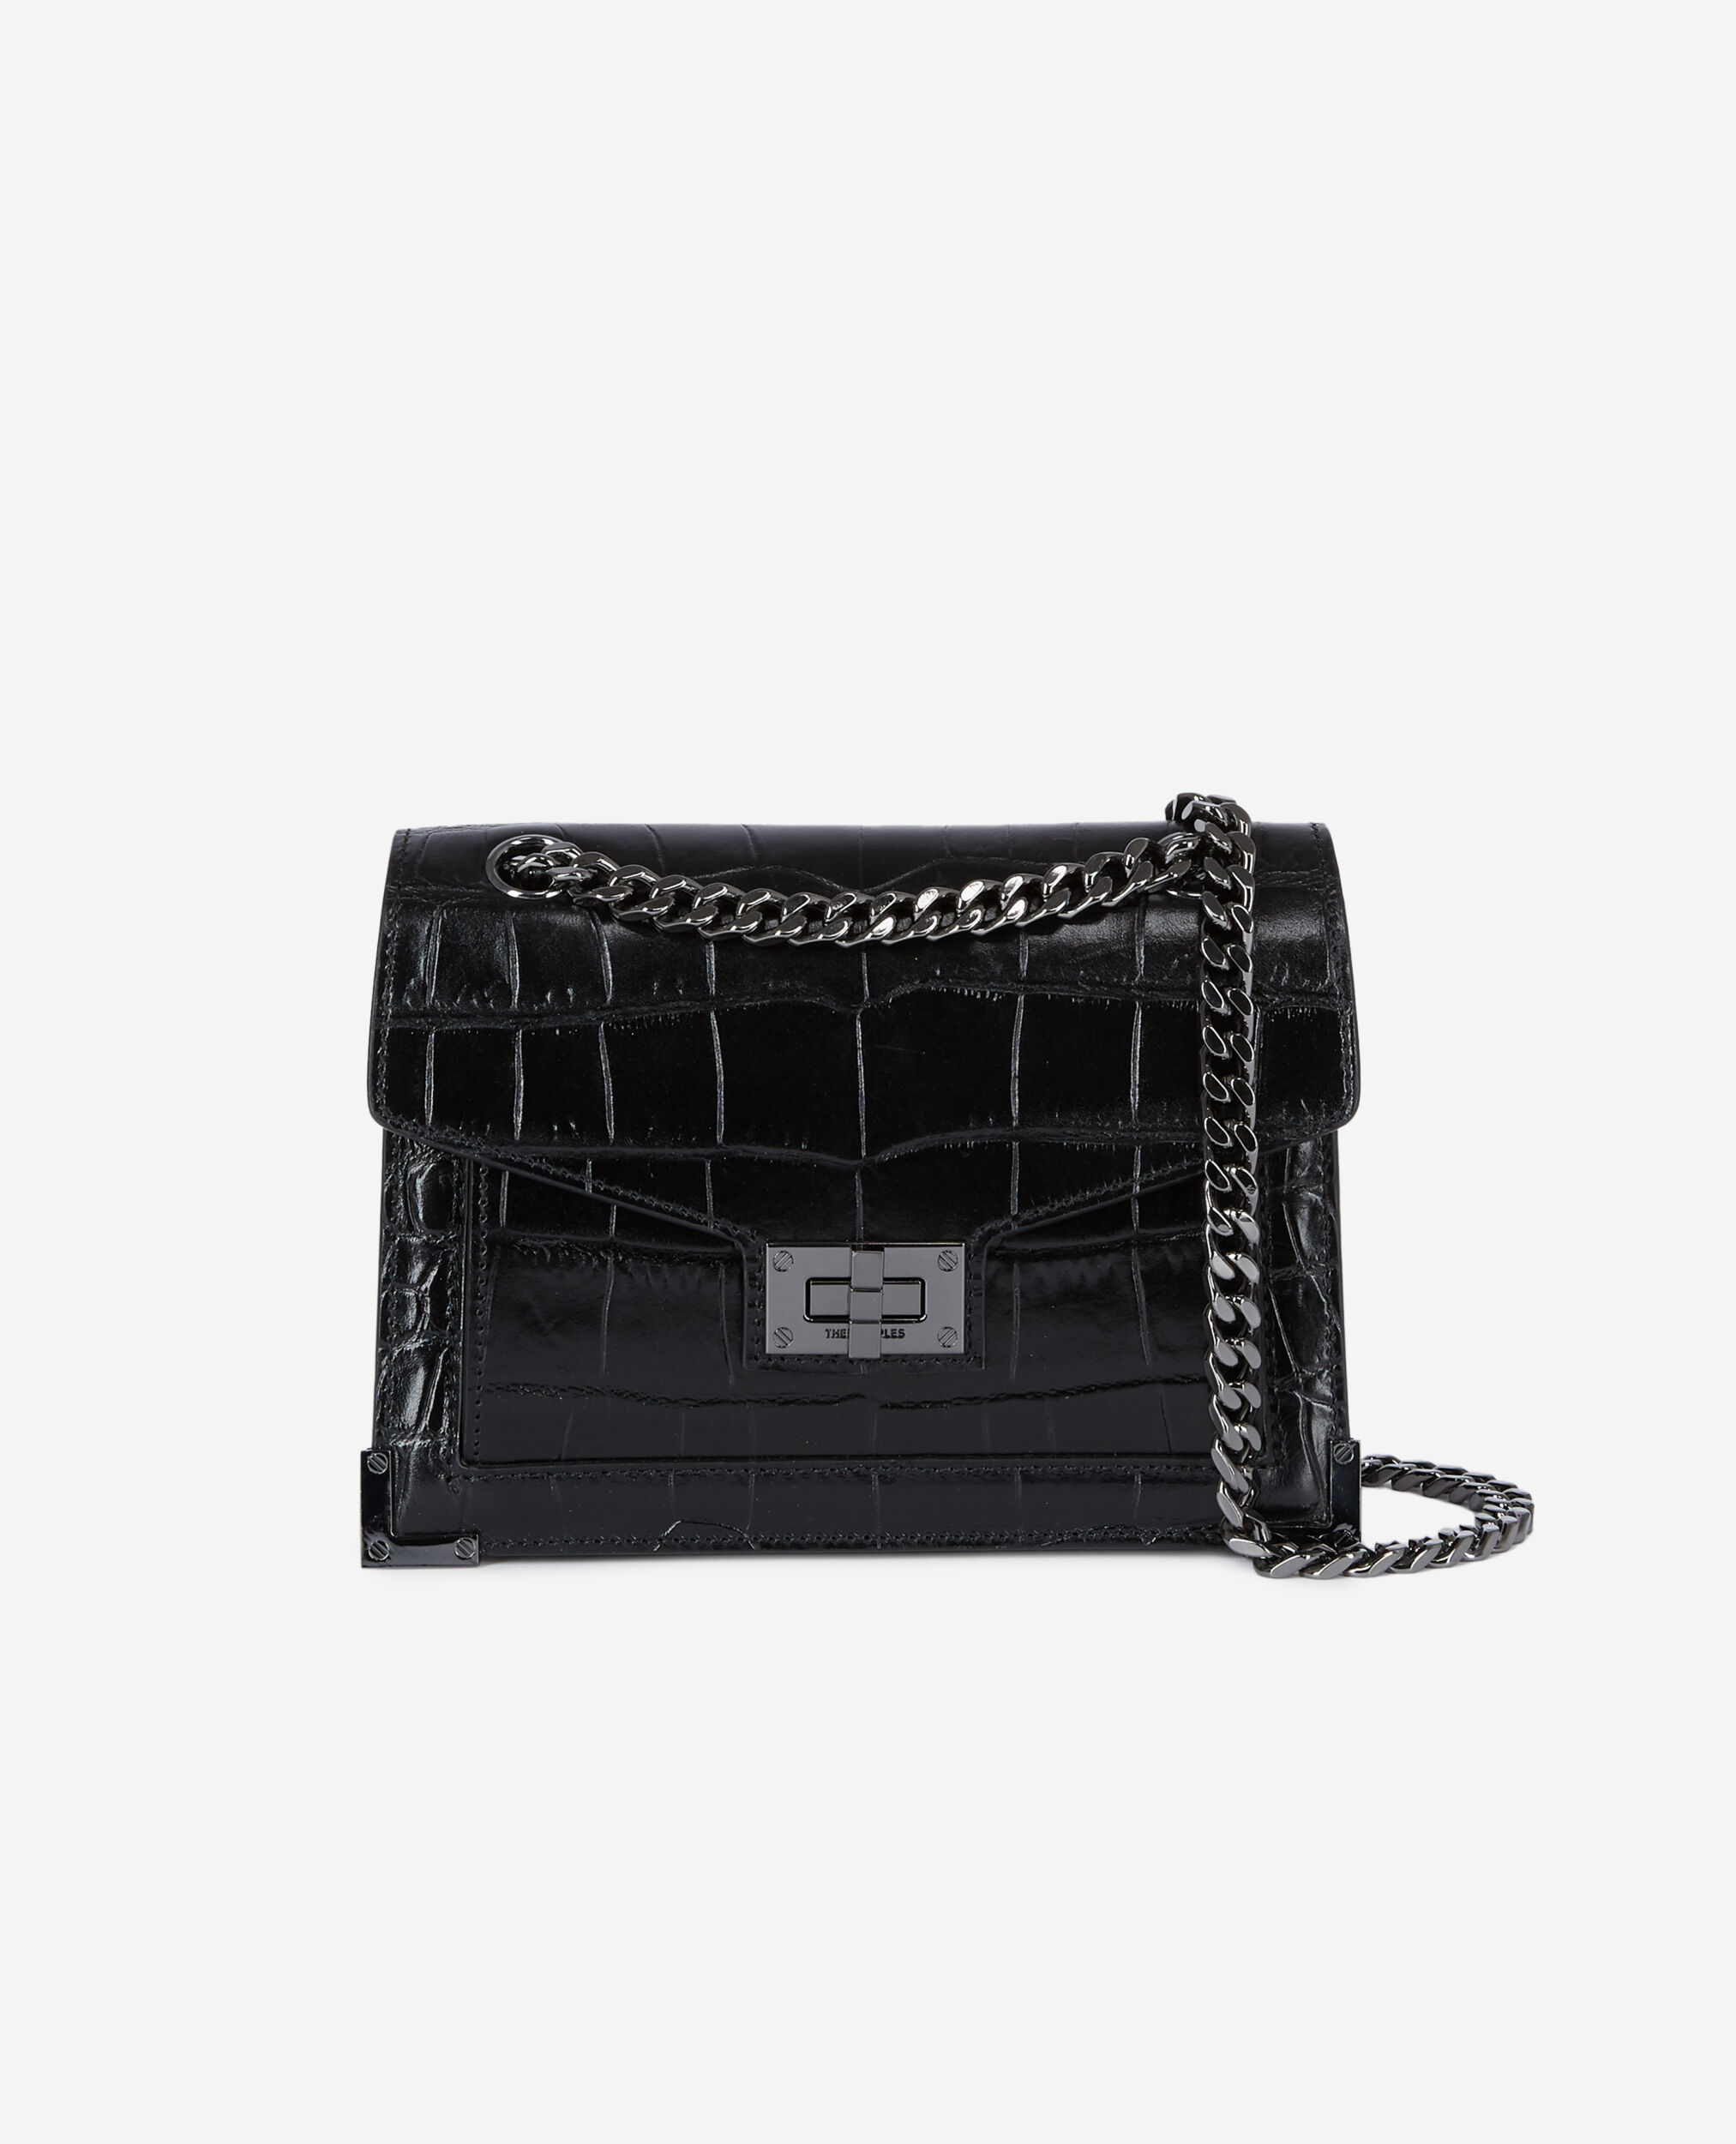 Chanel Black Edition